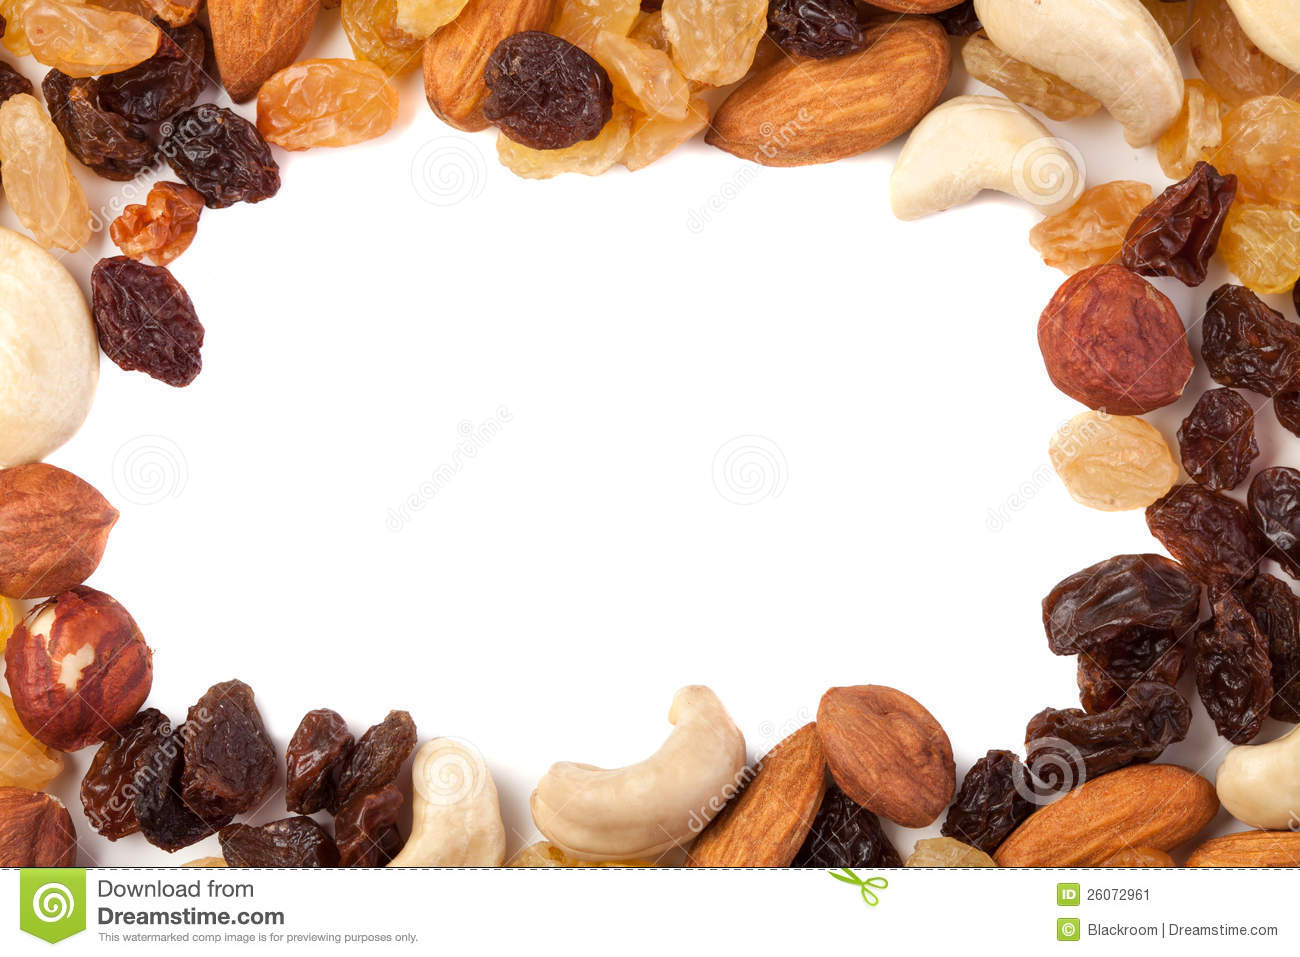 Raisins And Nuts Border Stock Image   Image  26072961